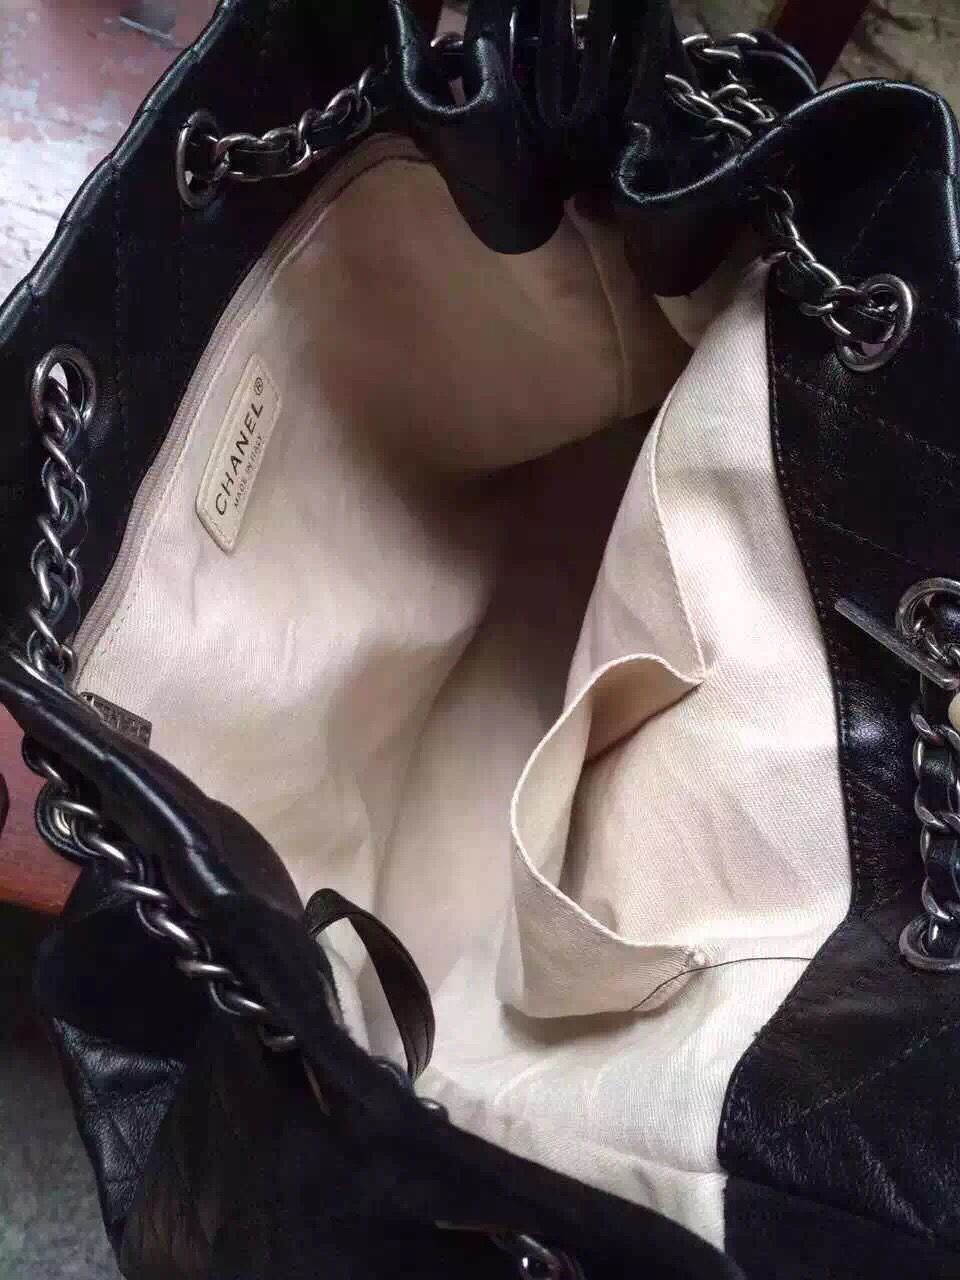 Chanel Backpack Calfskin & Deerskin Leather A82201 Black